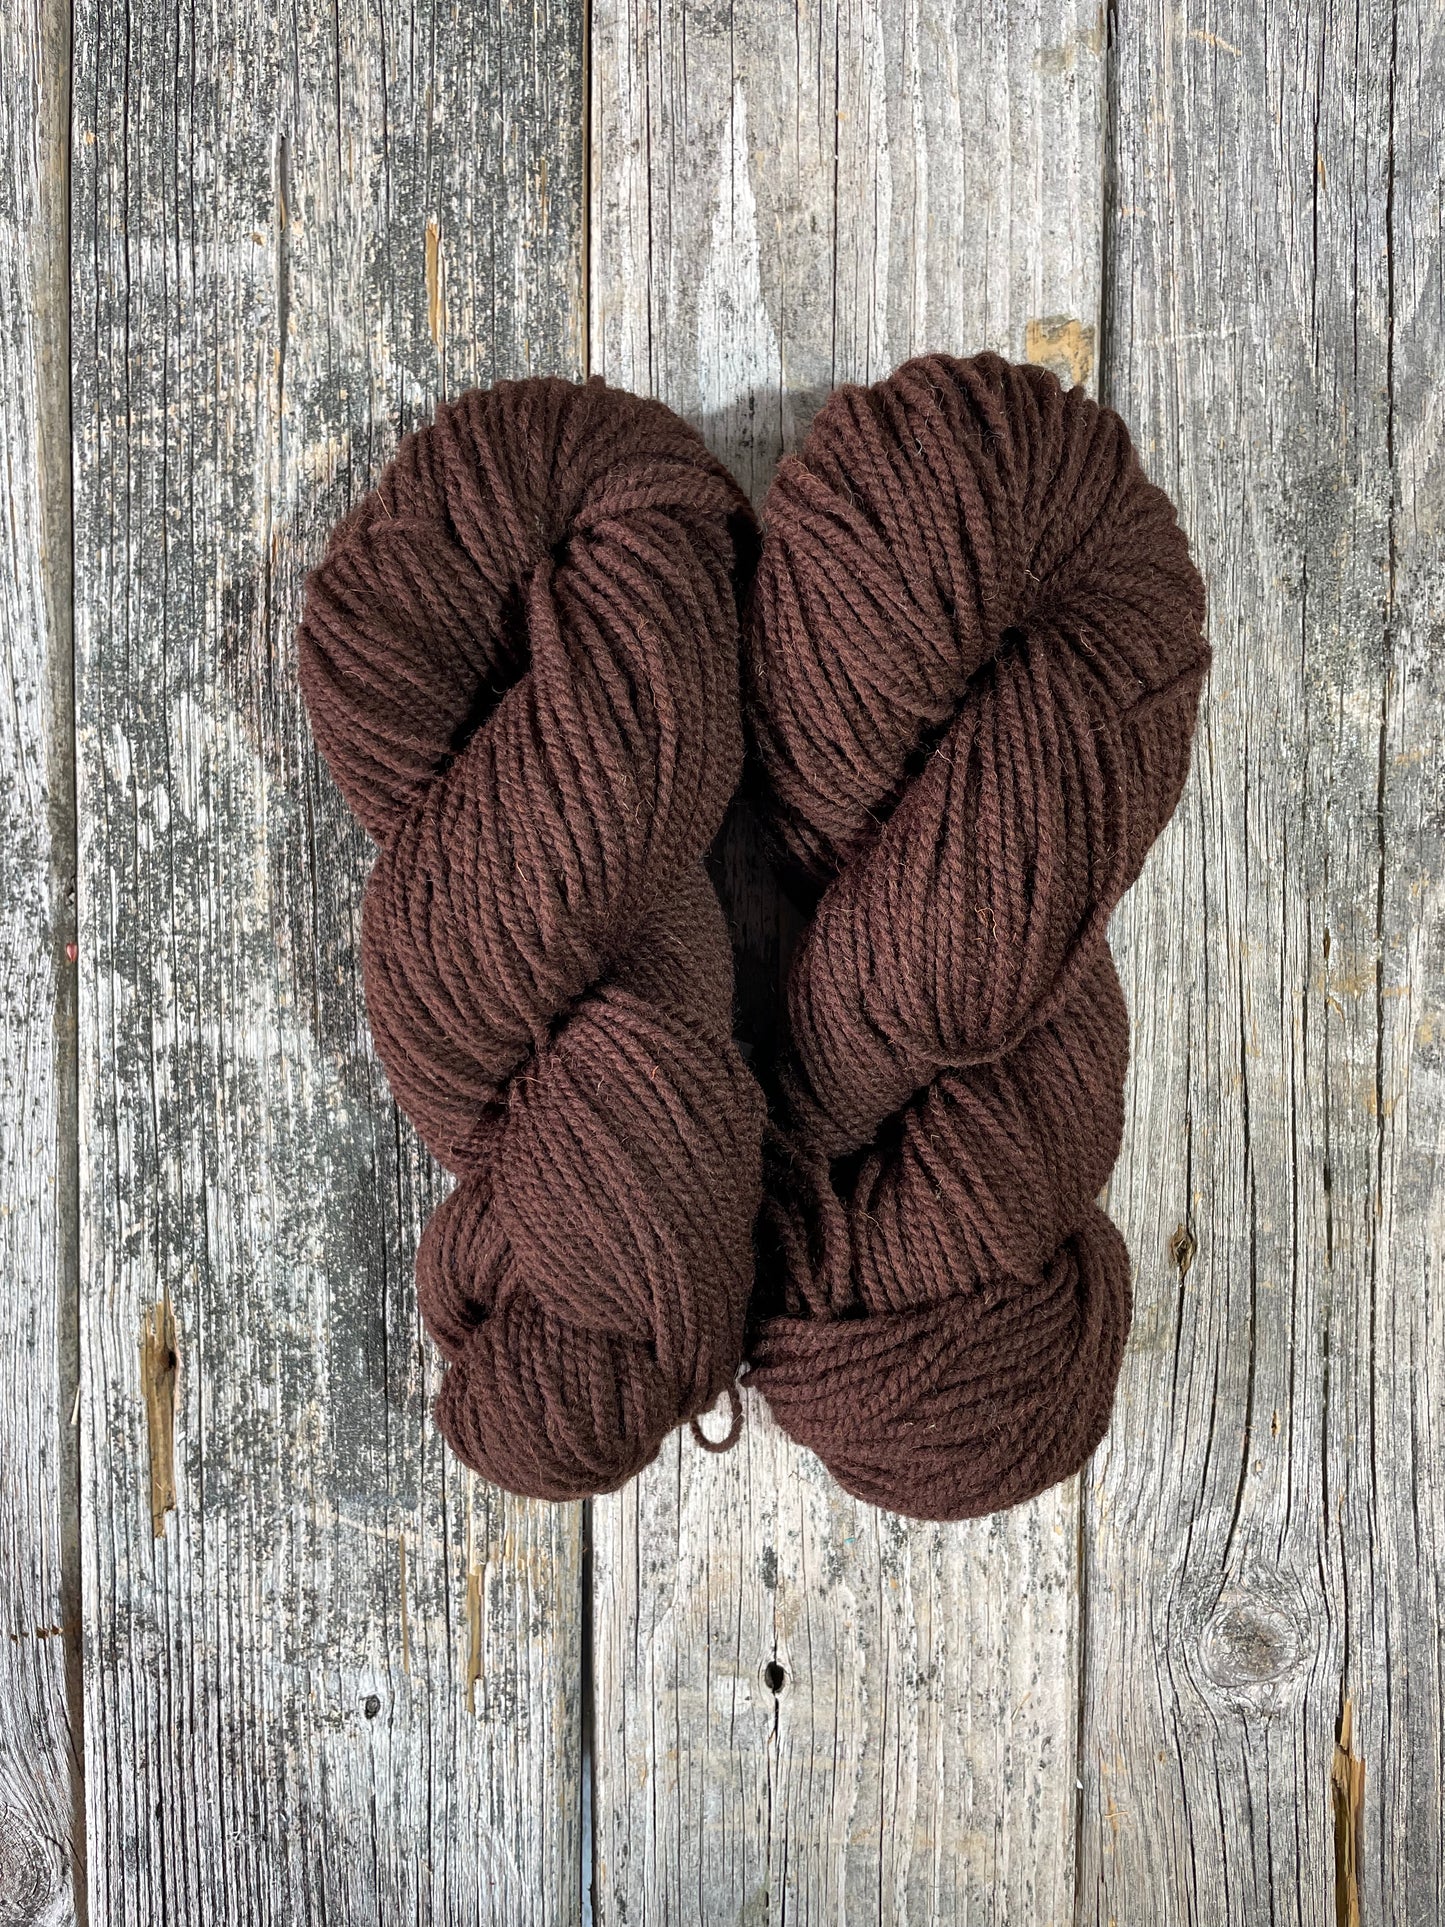 Briggs & Little Heritage: Brown - Maine Yarn & Fiber Supply